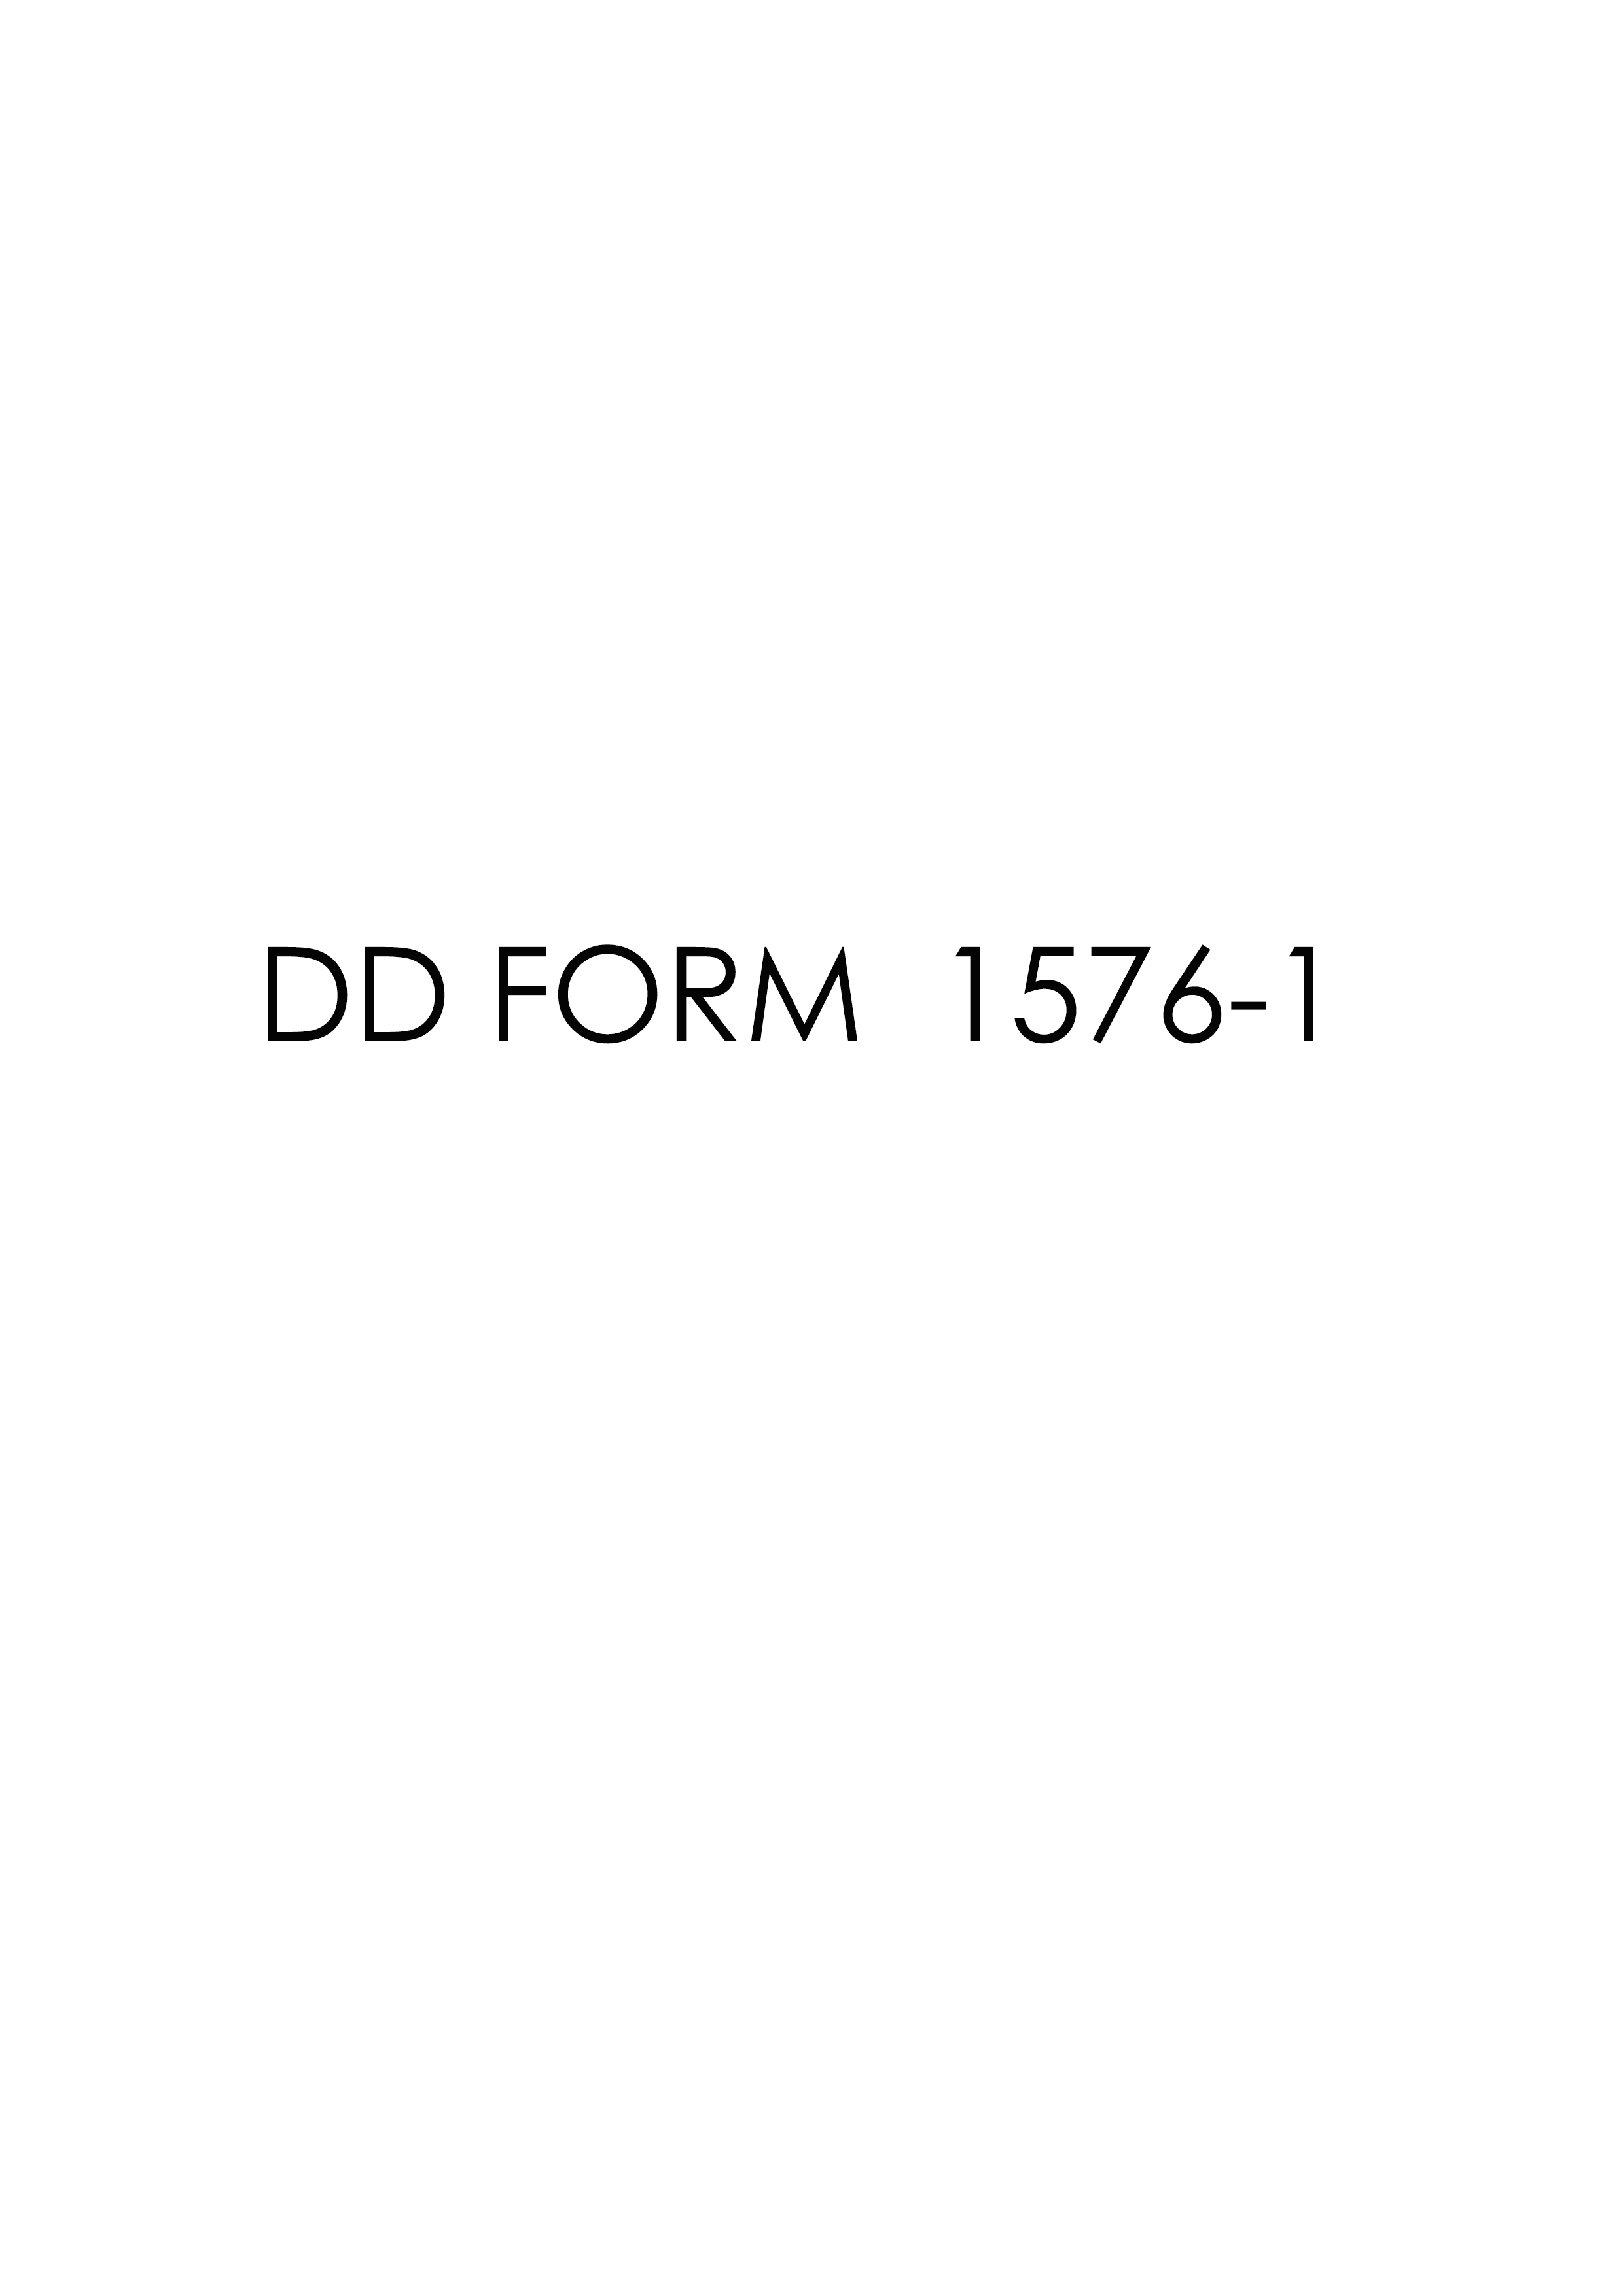 Download dd 1576-1 Form